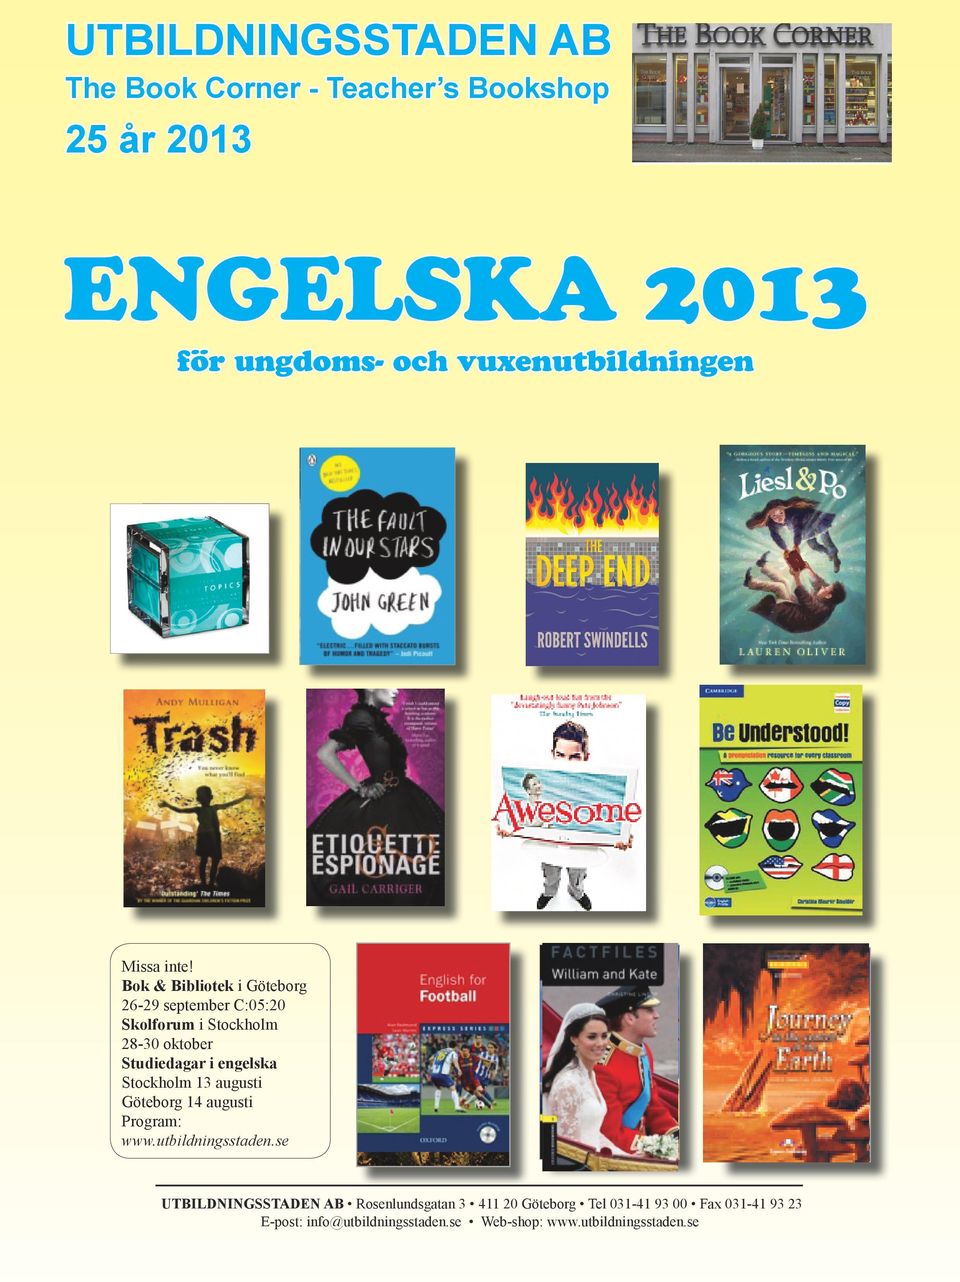 Bok & Bibliotek i Göteborg 26-29 september C:05:20 Skolforum i Stockholm 28-30 oktober Studiedagar i engelska